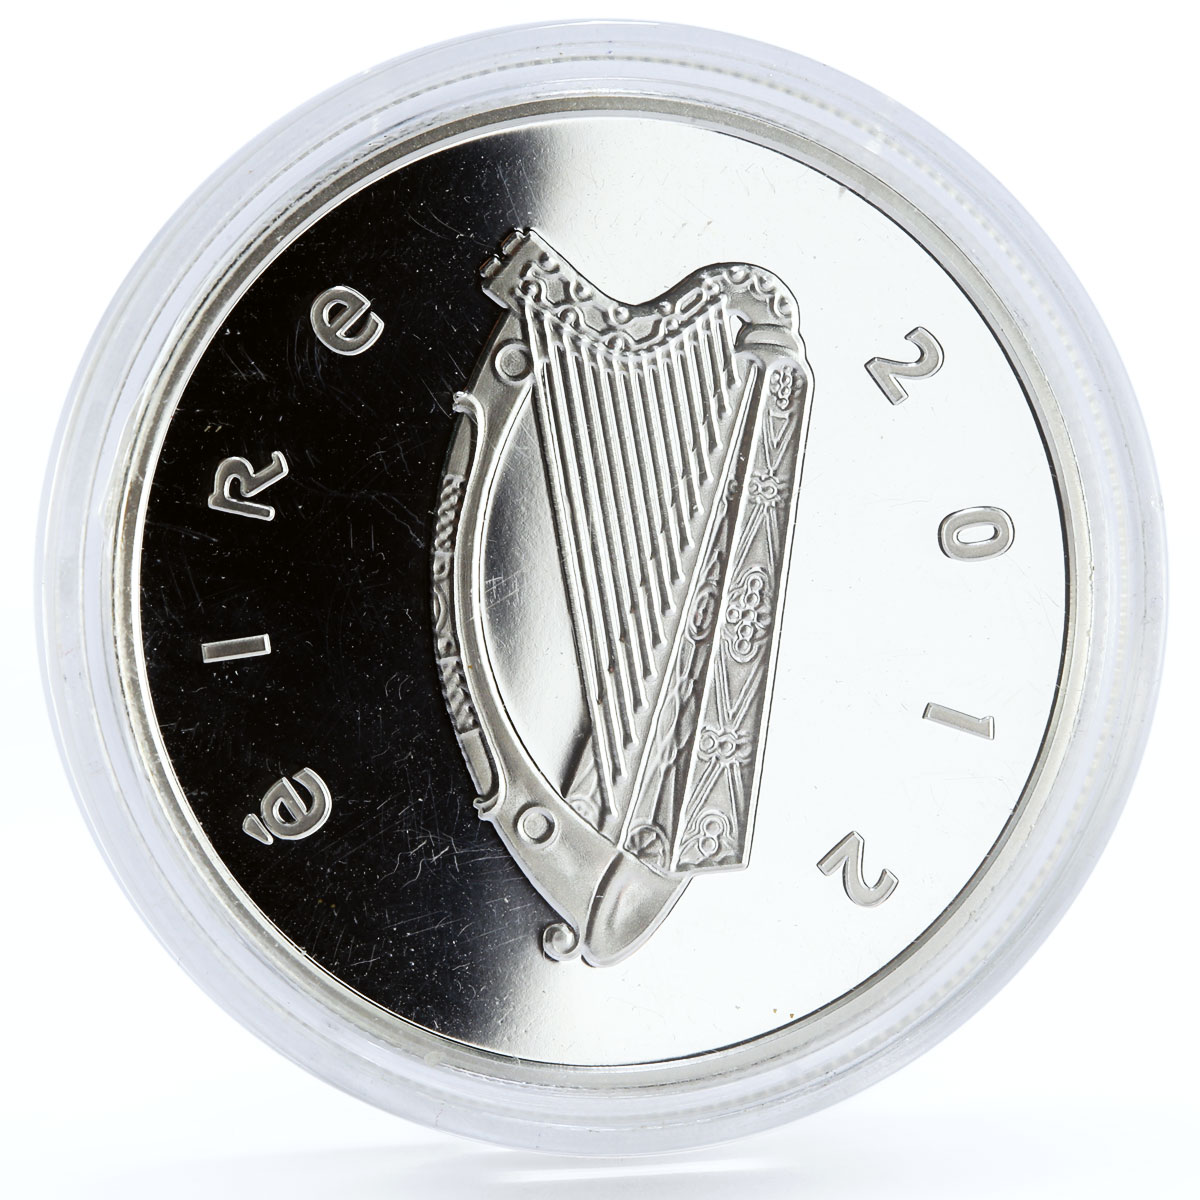 Ireland 15 euro Symbols of Irish Coinage Wolfhound Dog Animals silver coin 2012